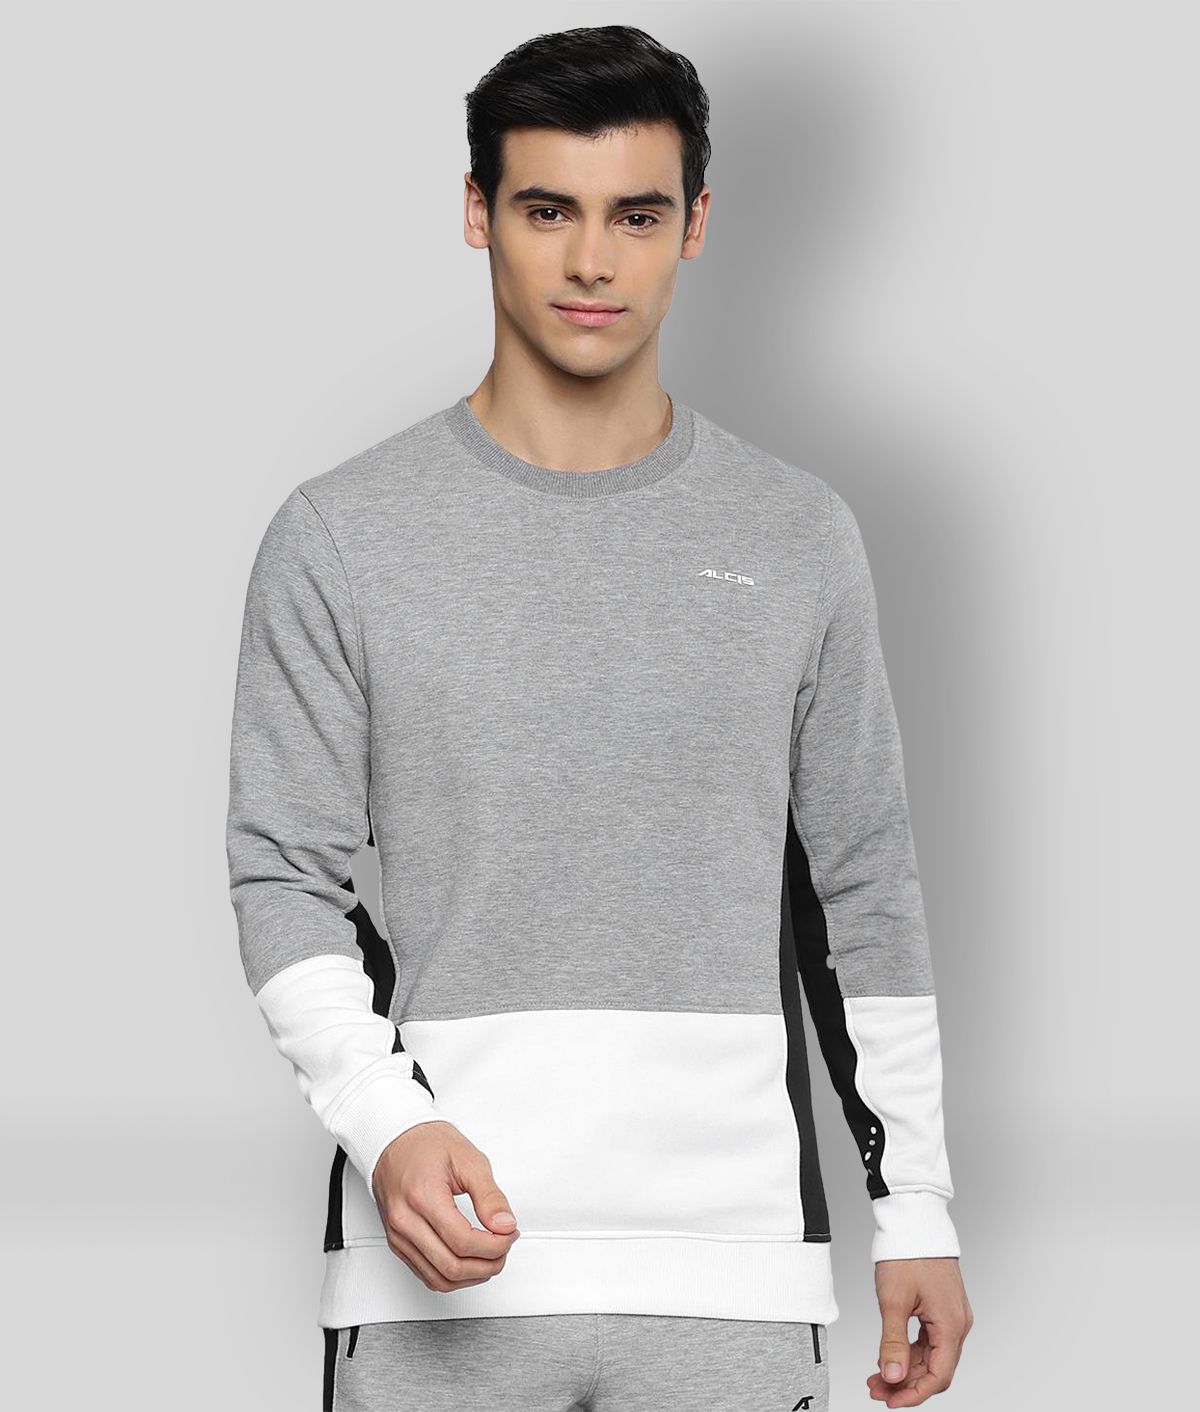     			Alcis -  Light Grey Cotton Men's Running Sweatshirt ( Pack of 1 )